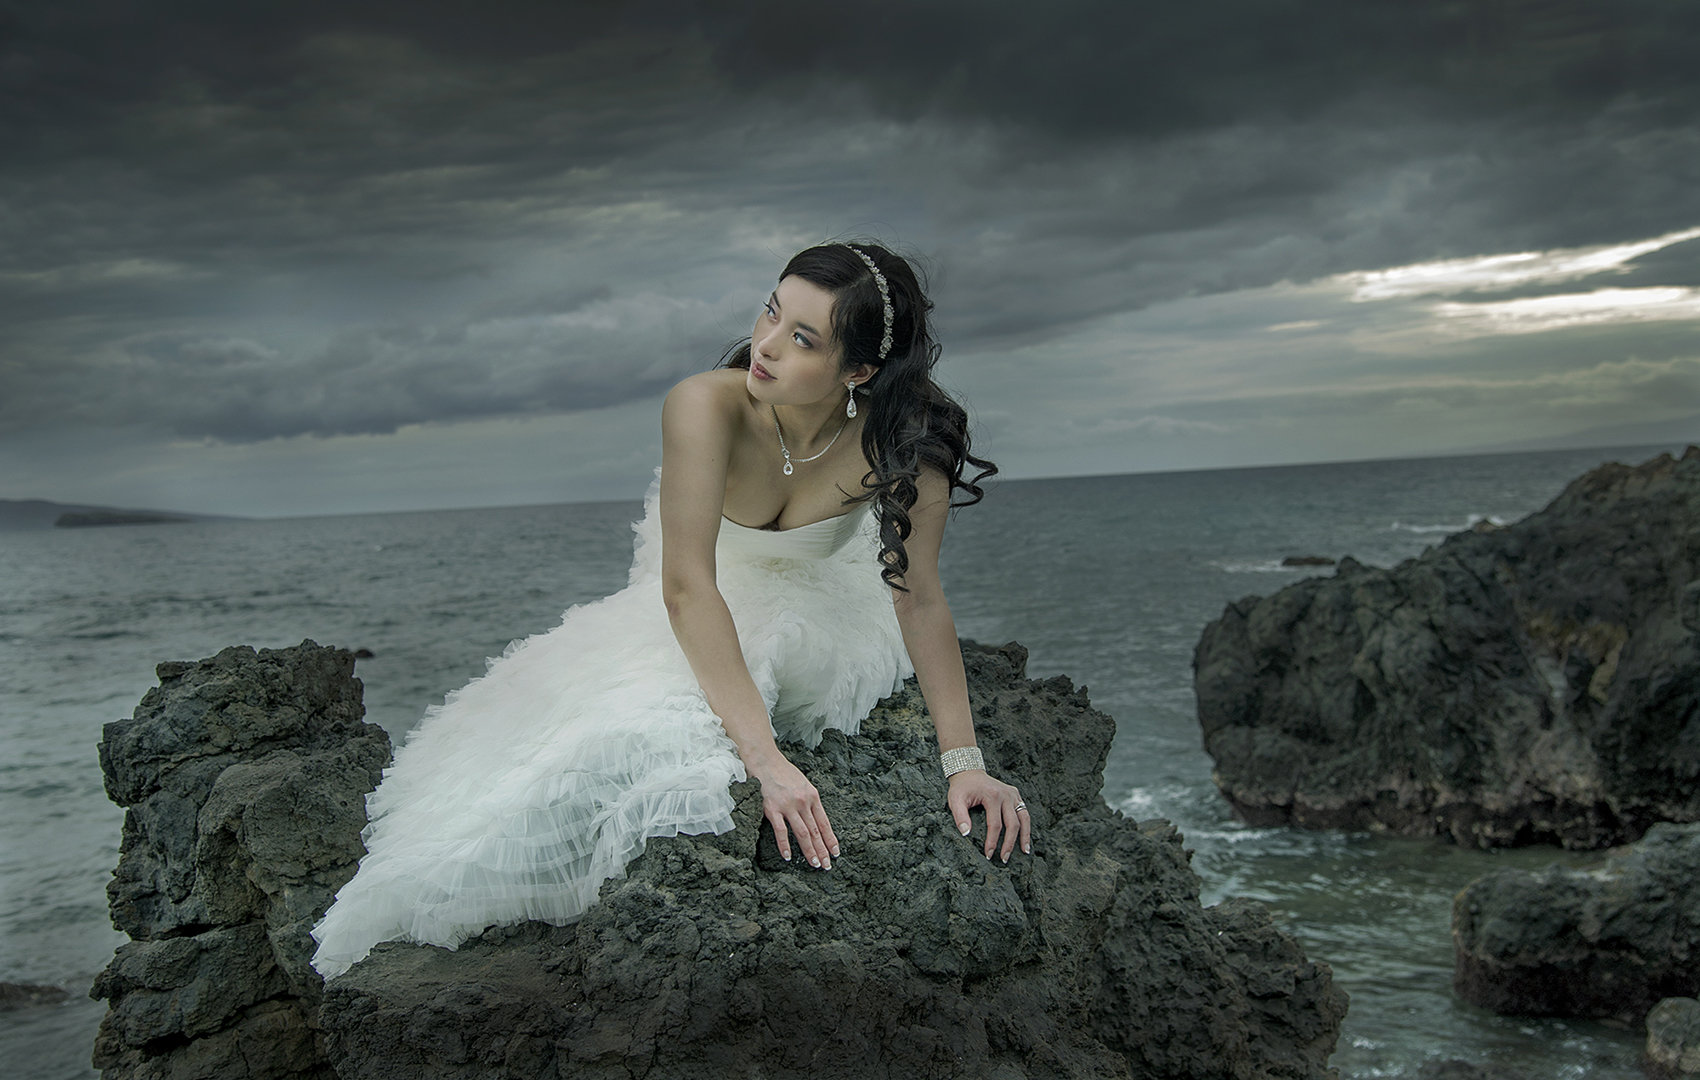 Maui photographer